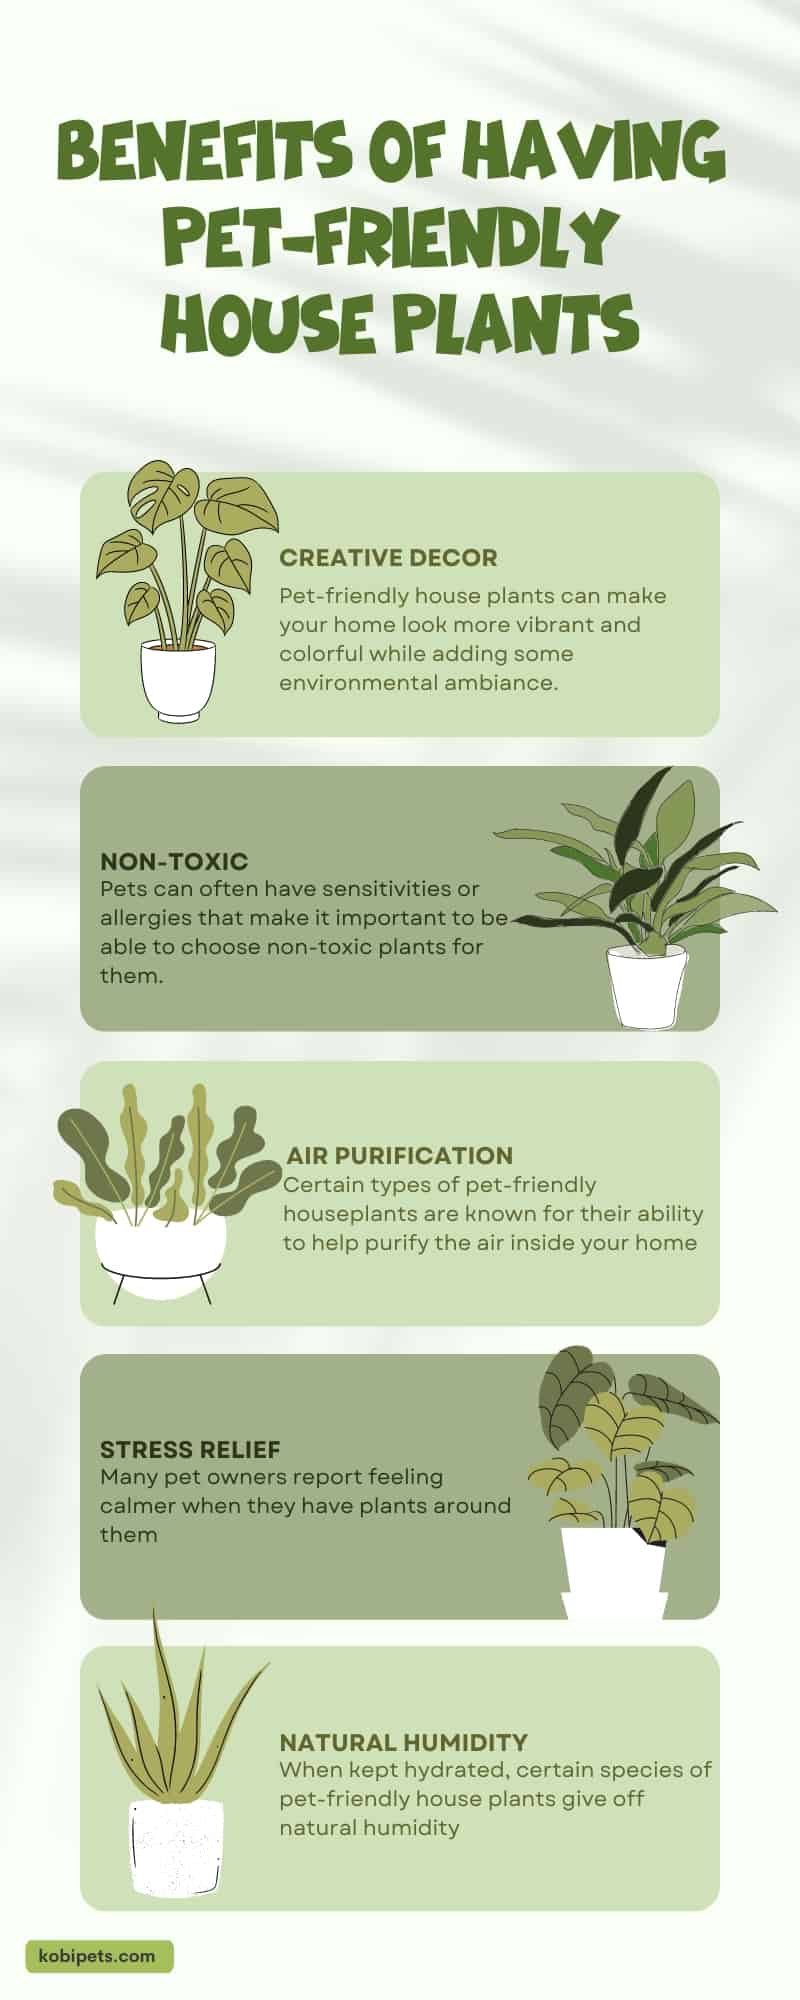 Benefits of Having Pet-Friendly House Plants